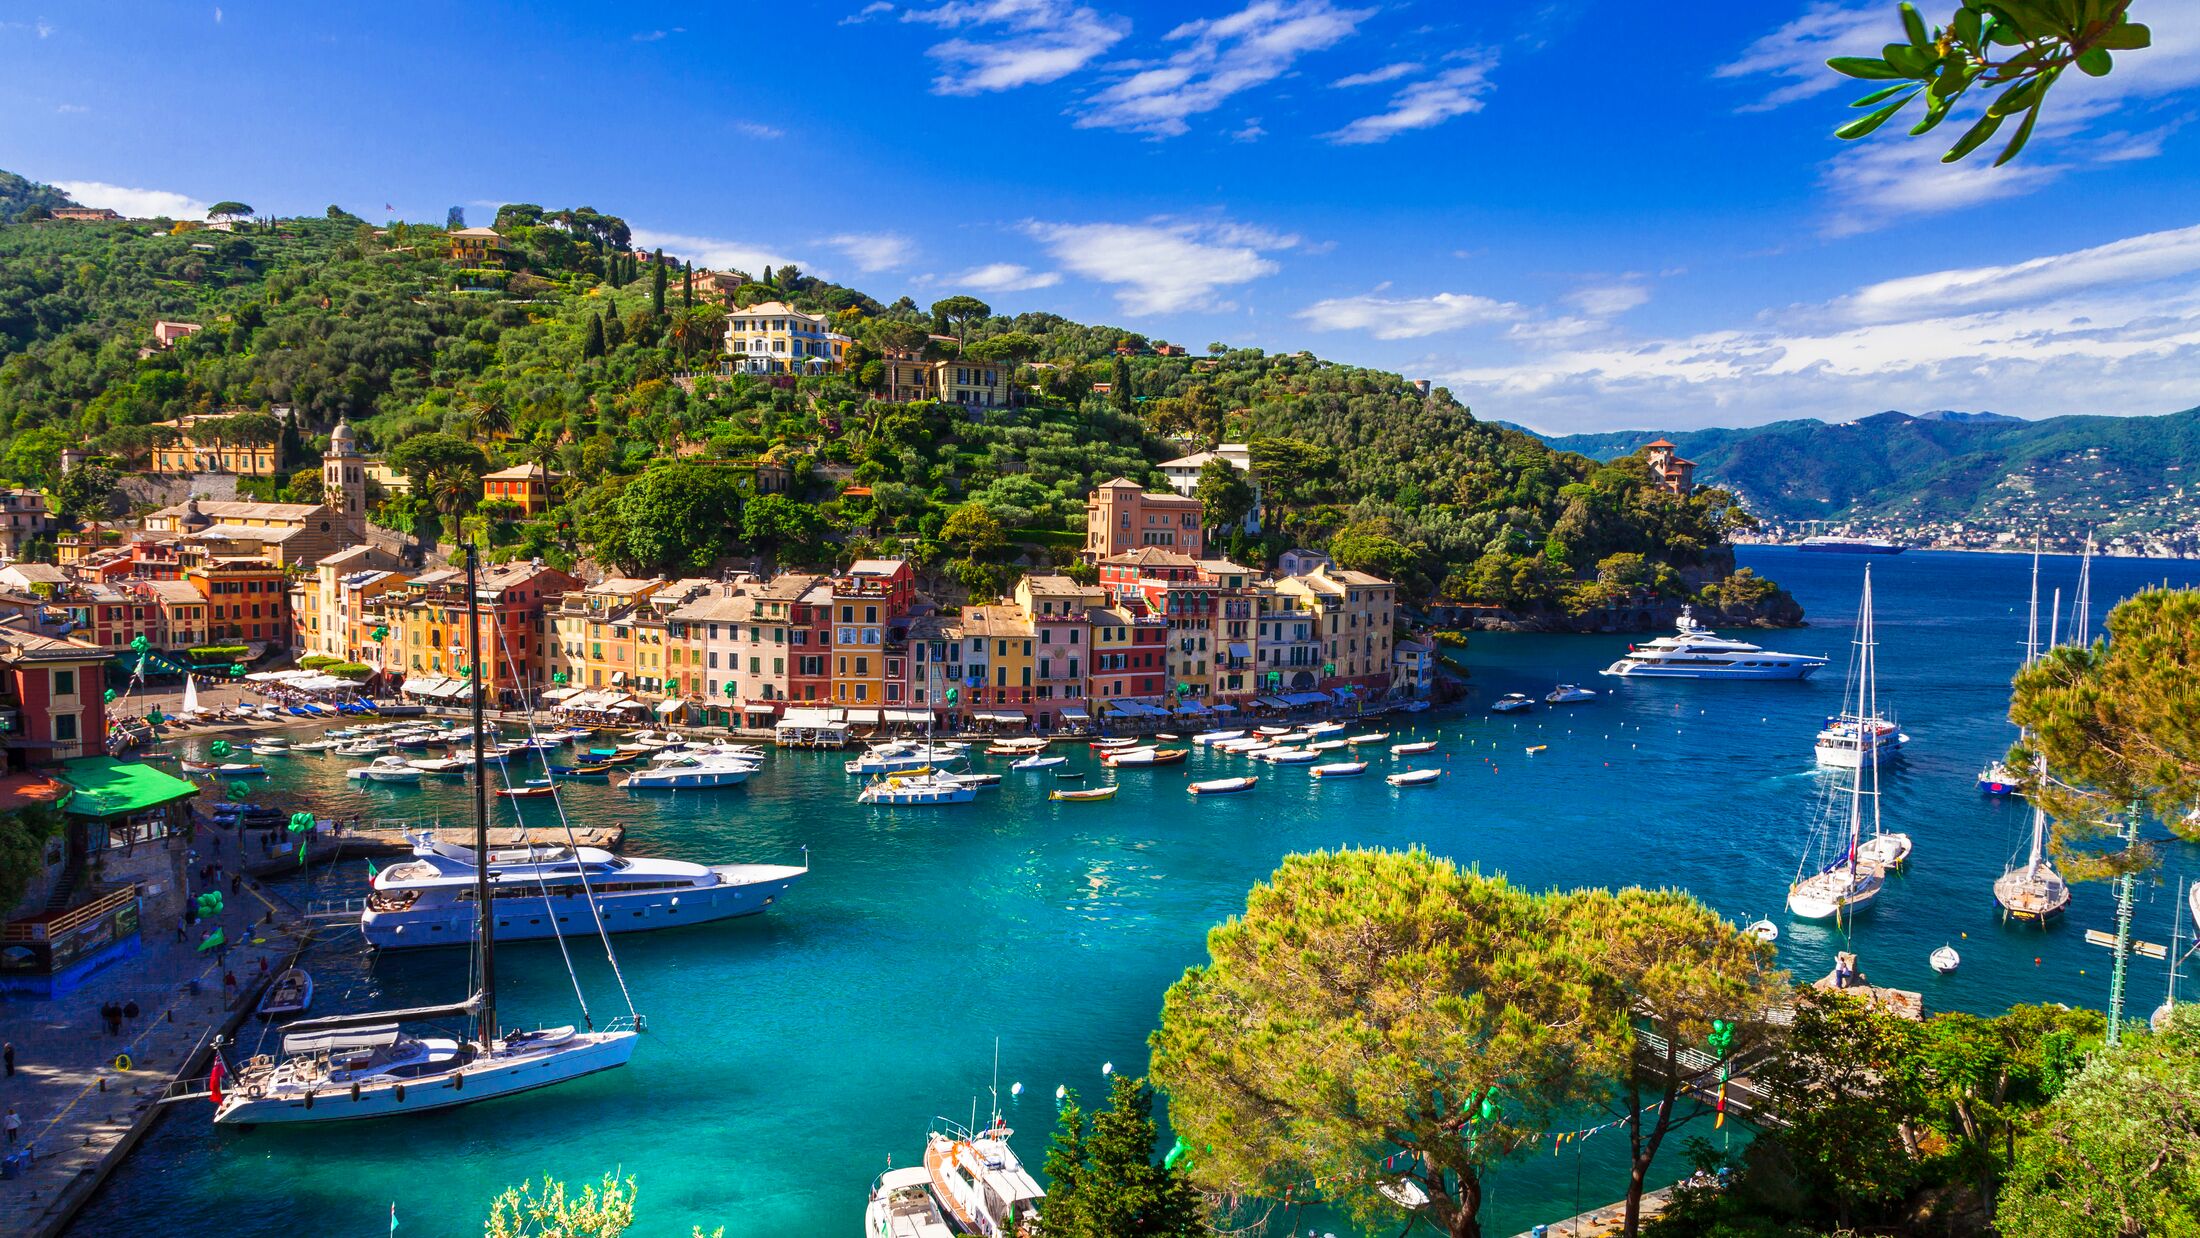 Portofino - Italian fishing village and  luxury holiday resort in Liguria